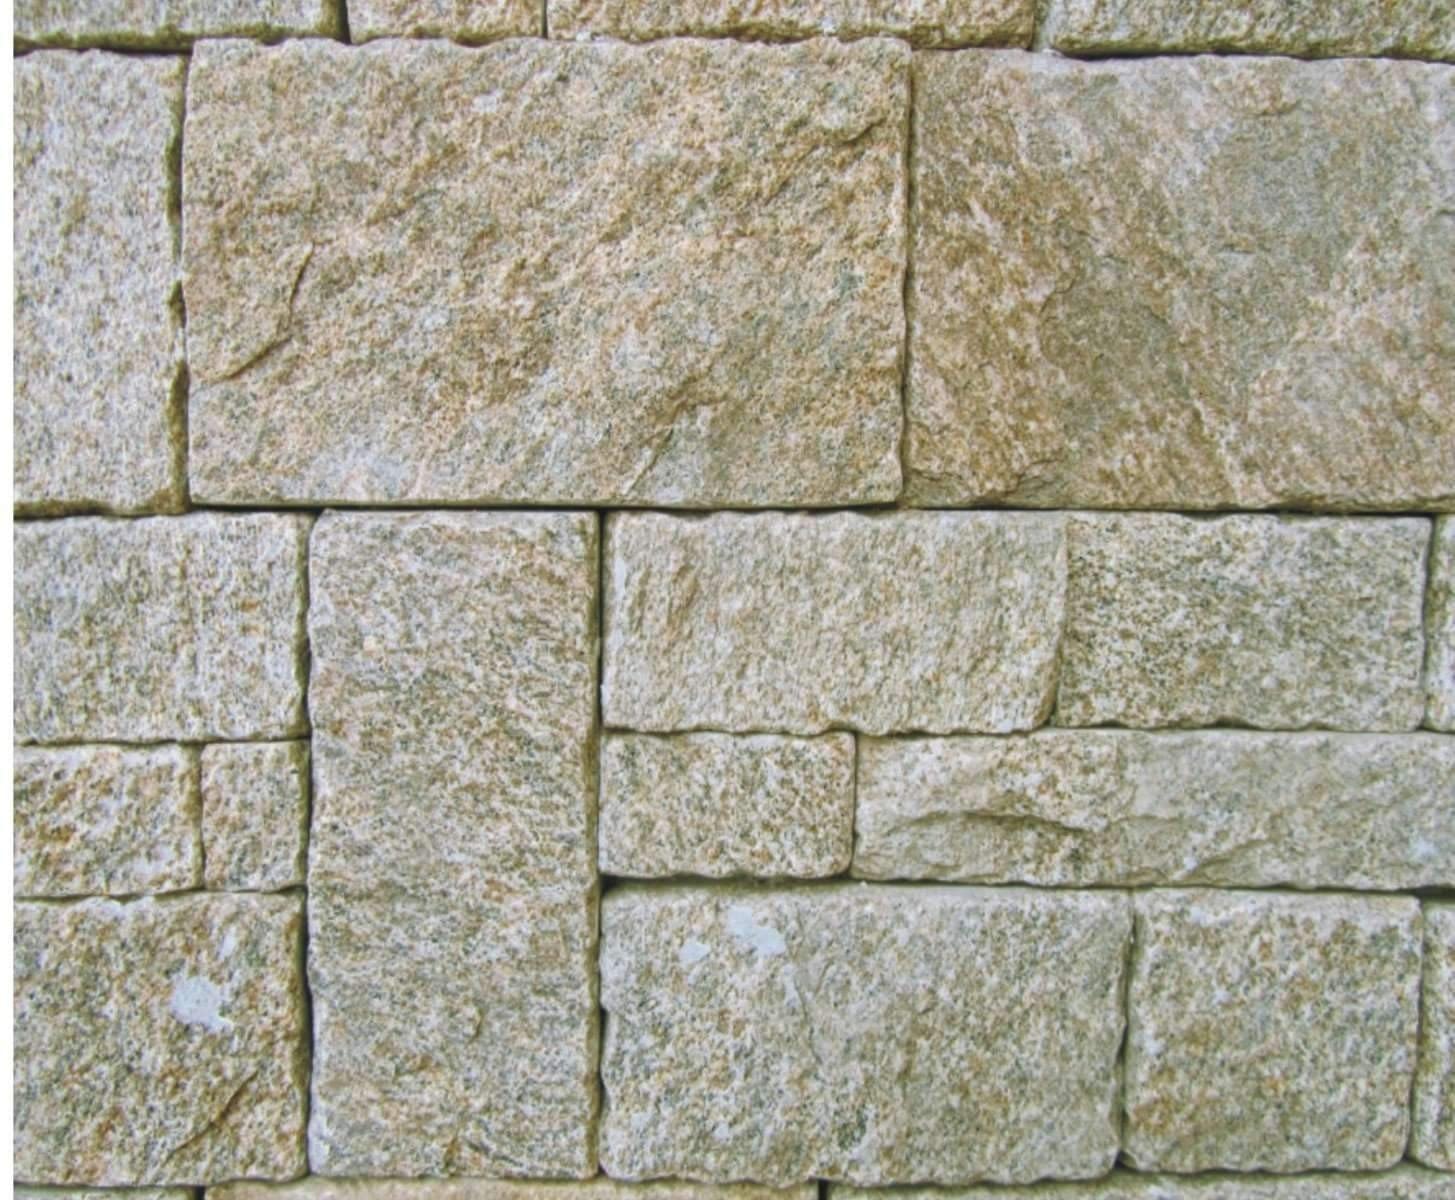 Mill Edge - Limestone cheap stone veneer clearance - Discount Stones wholesale stone veneer, cheap brick veneer, cultured stone for sale